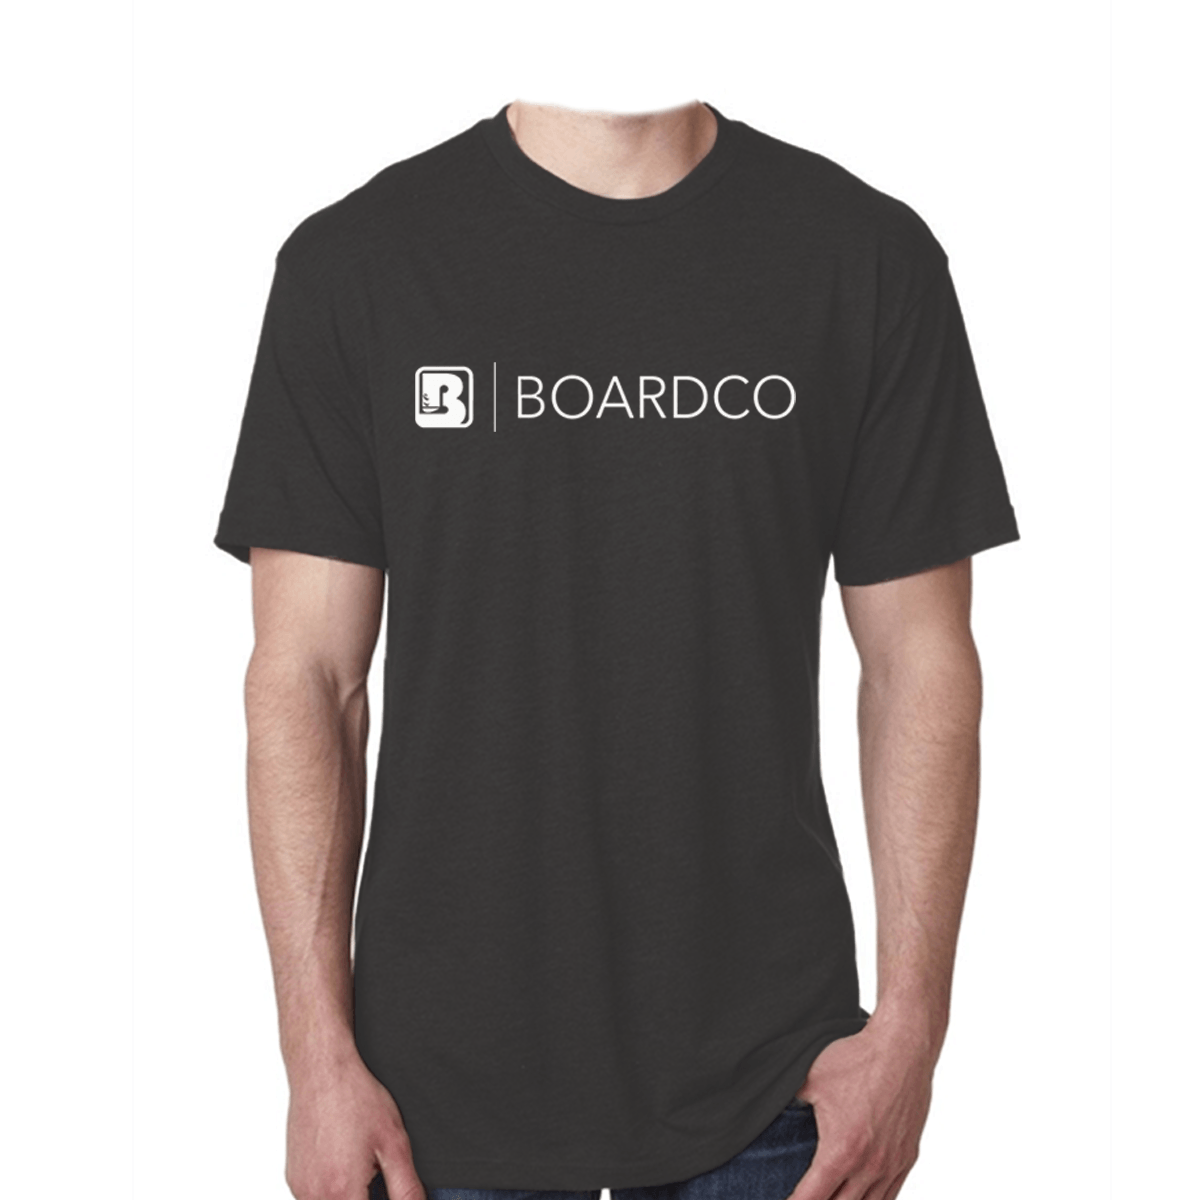 BoardCo Brand Tee in Black - BoardCo